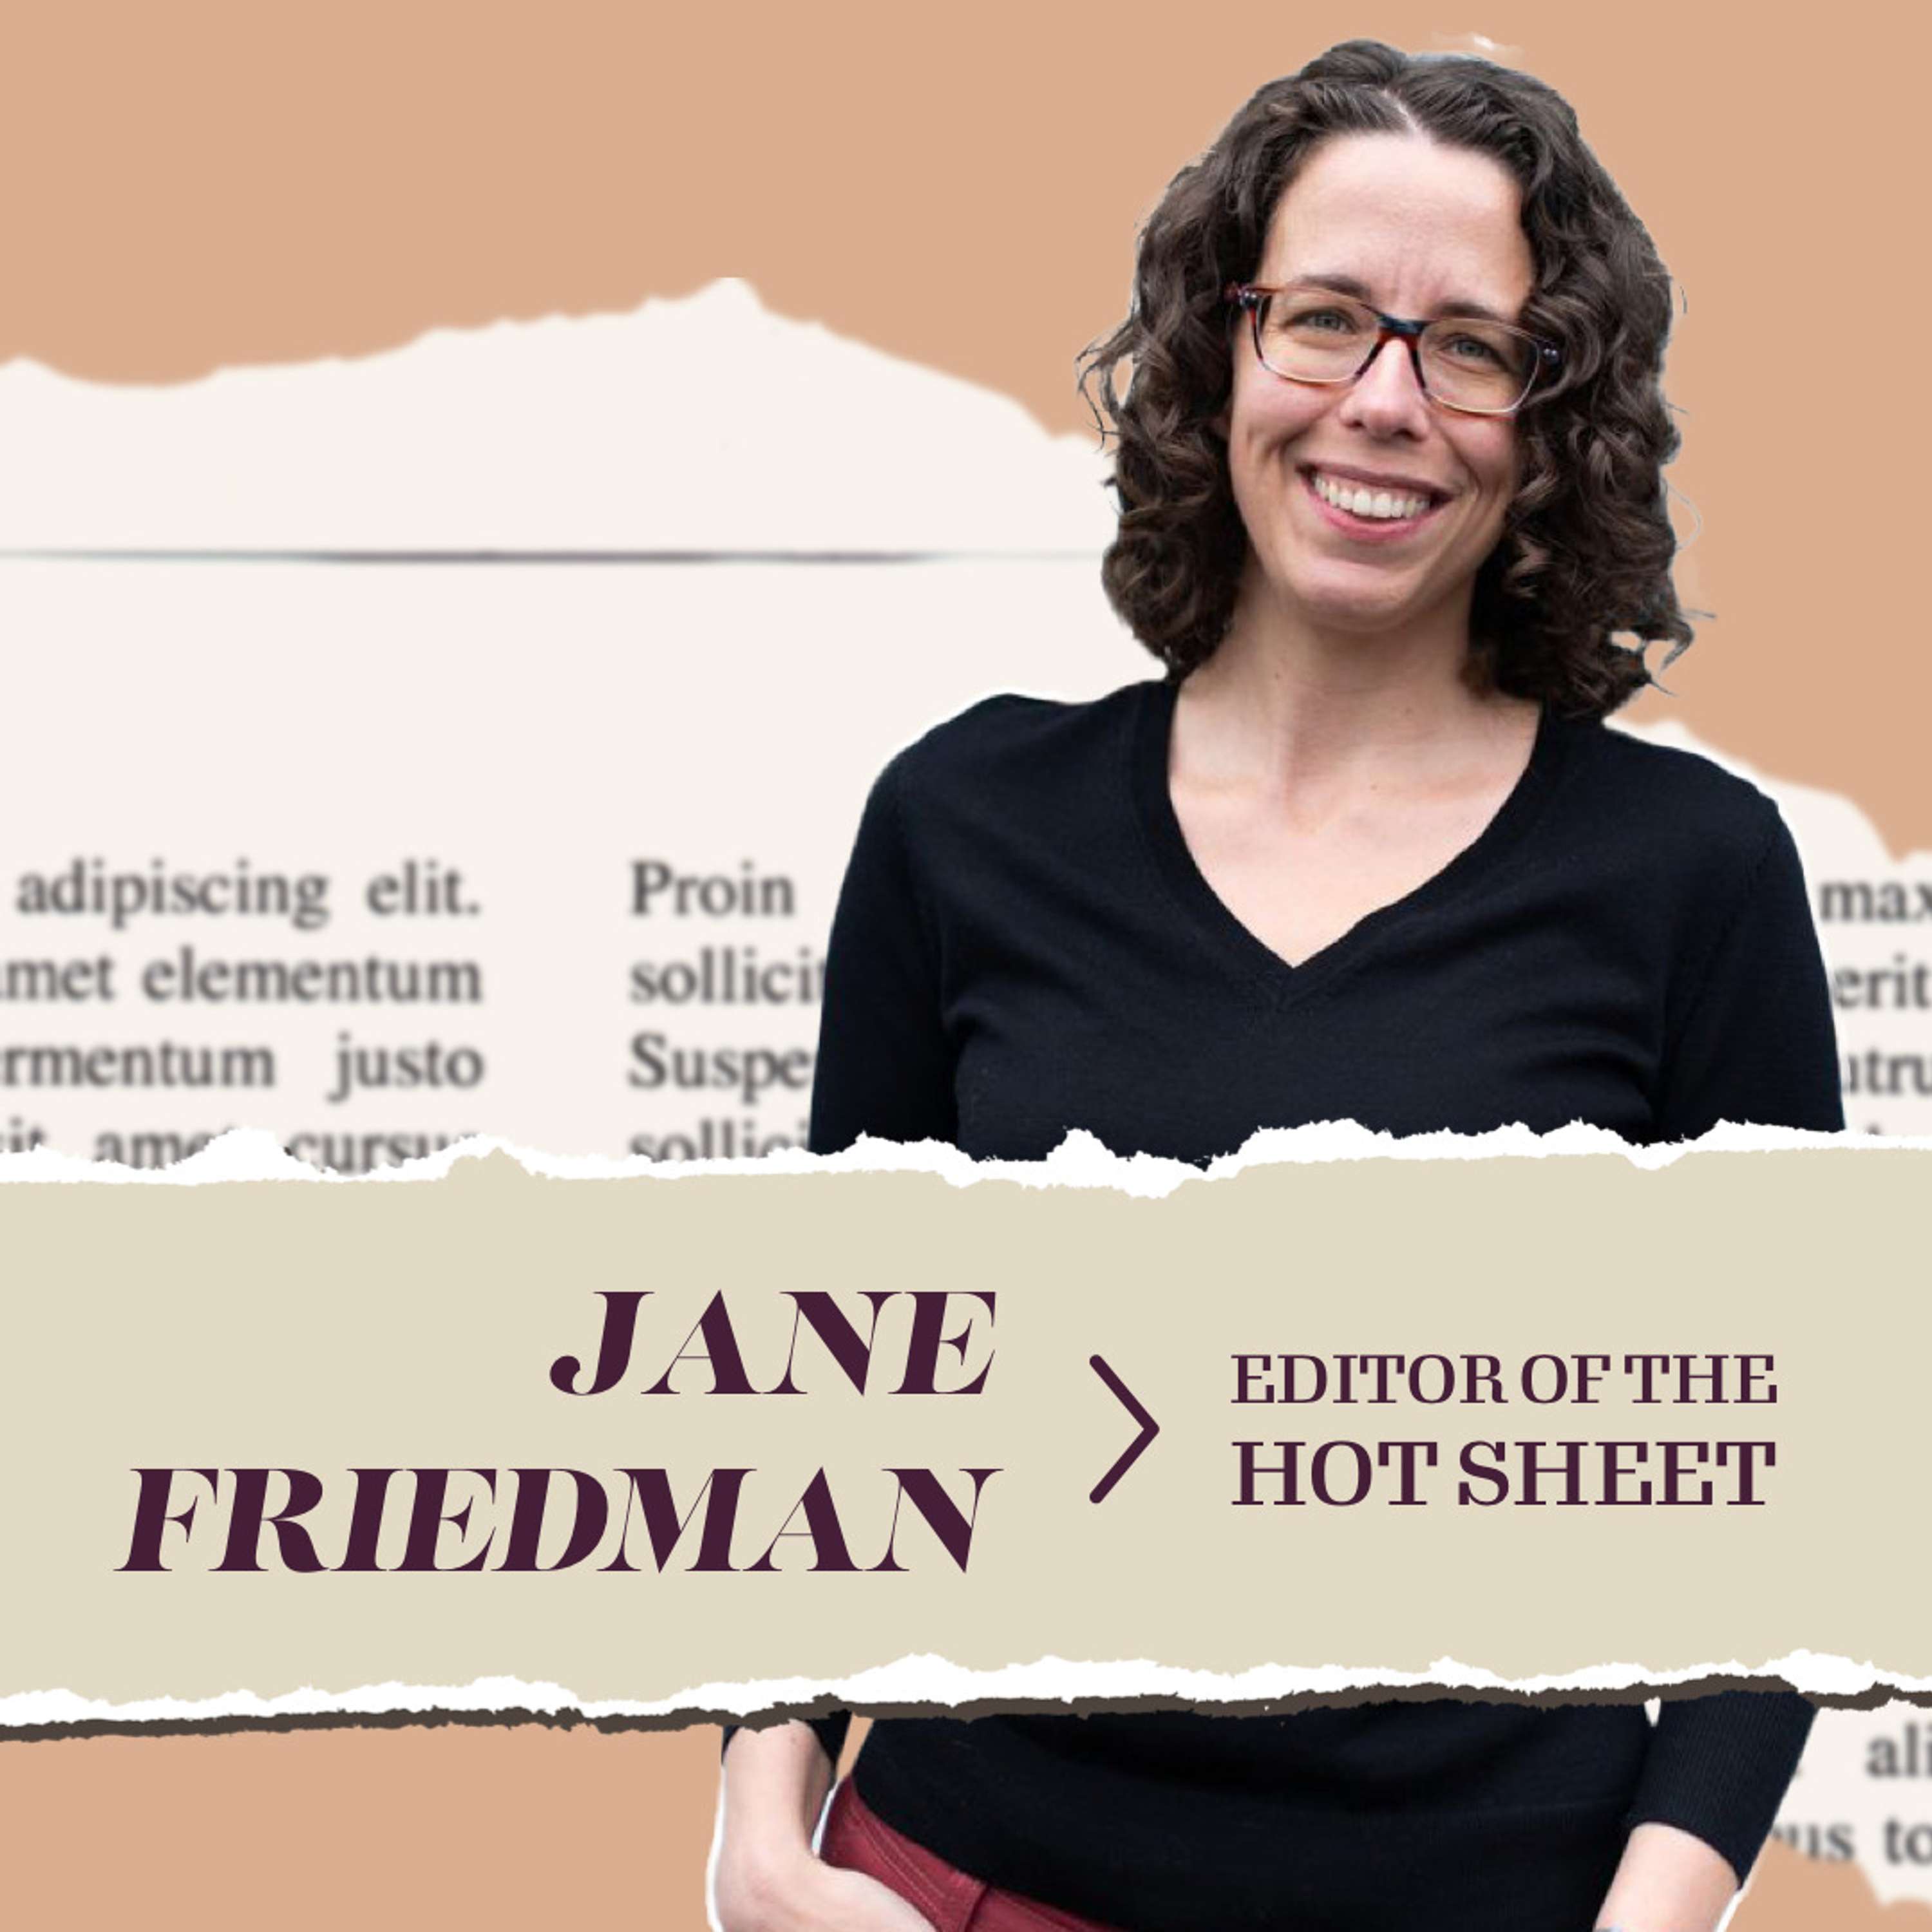 Jane Friedman - Editor of The Hot Sheet